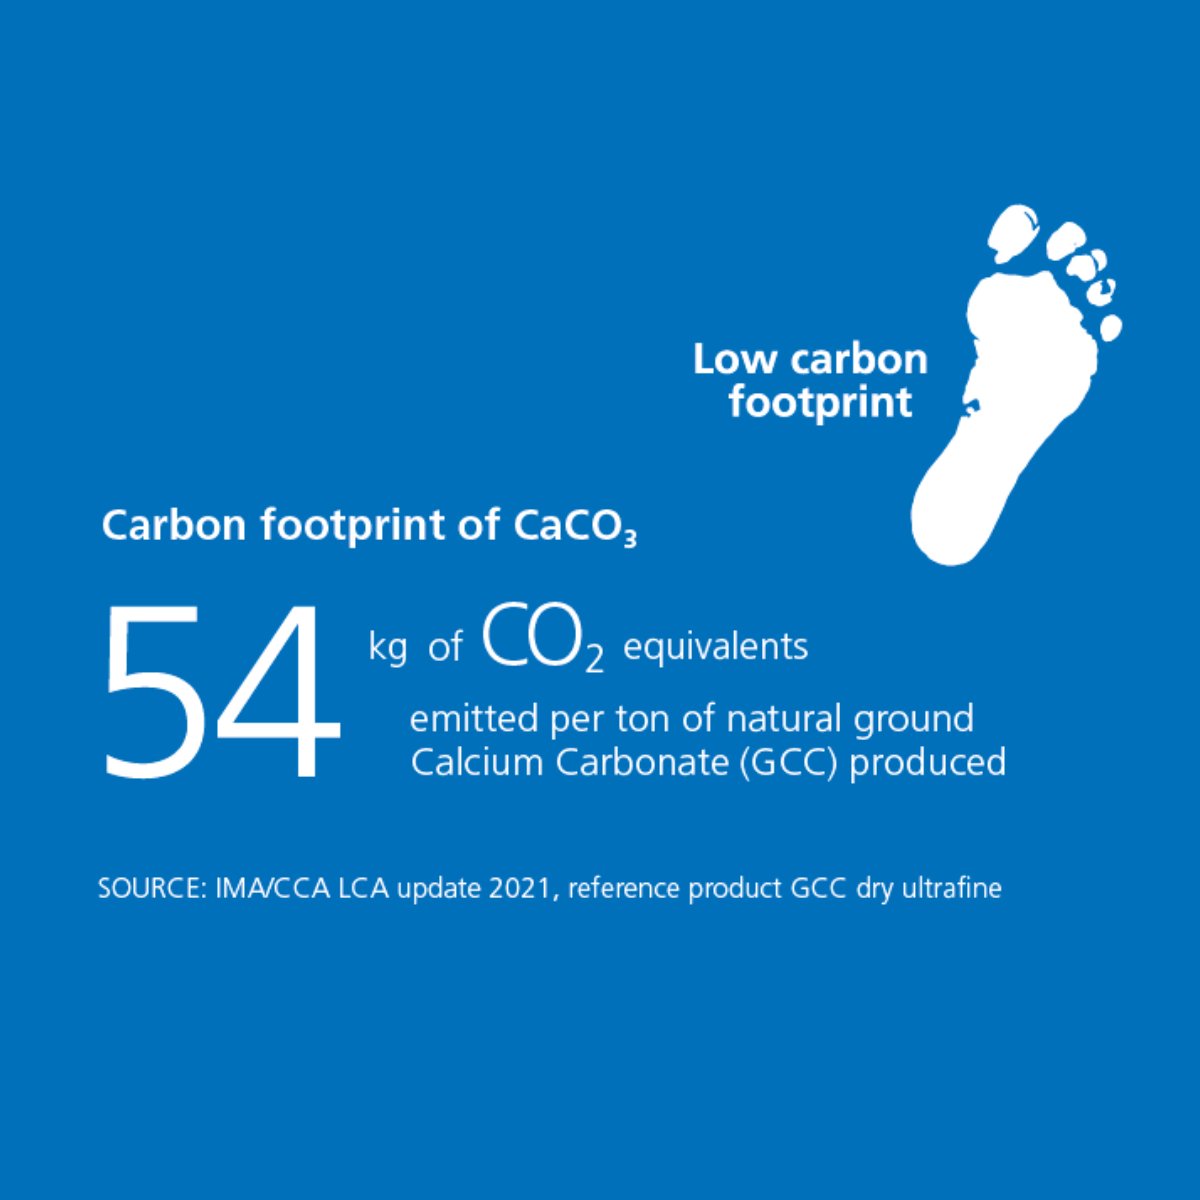 carbon-footprint